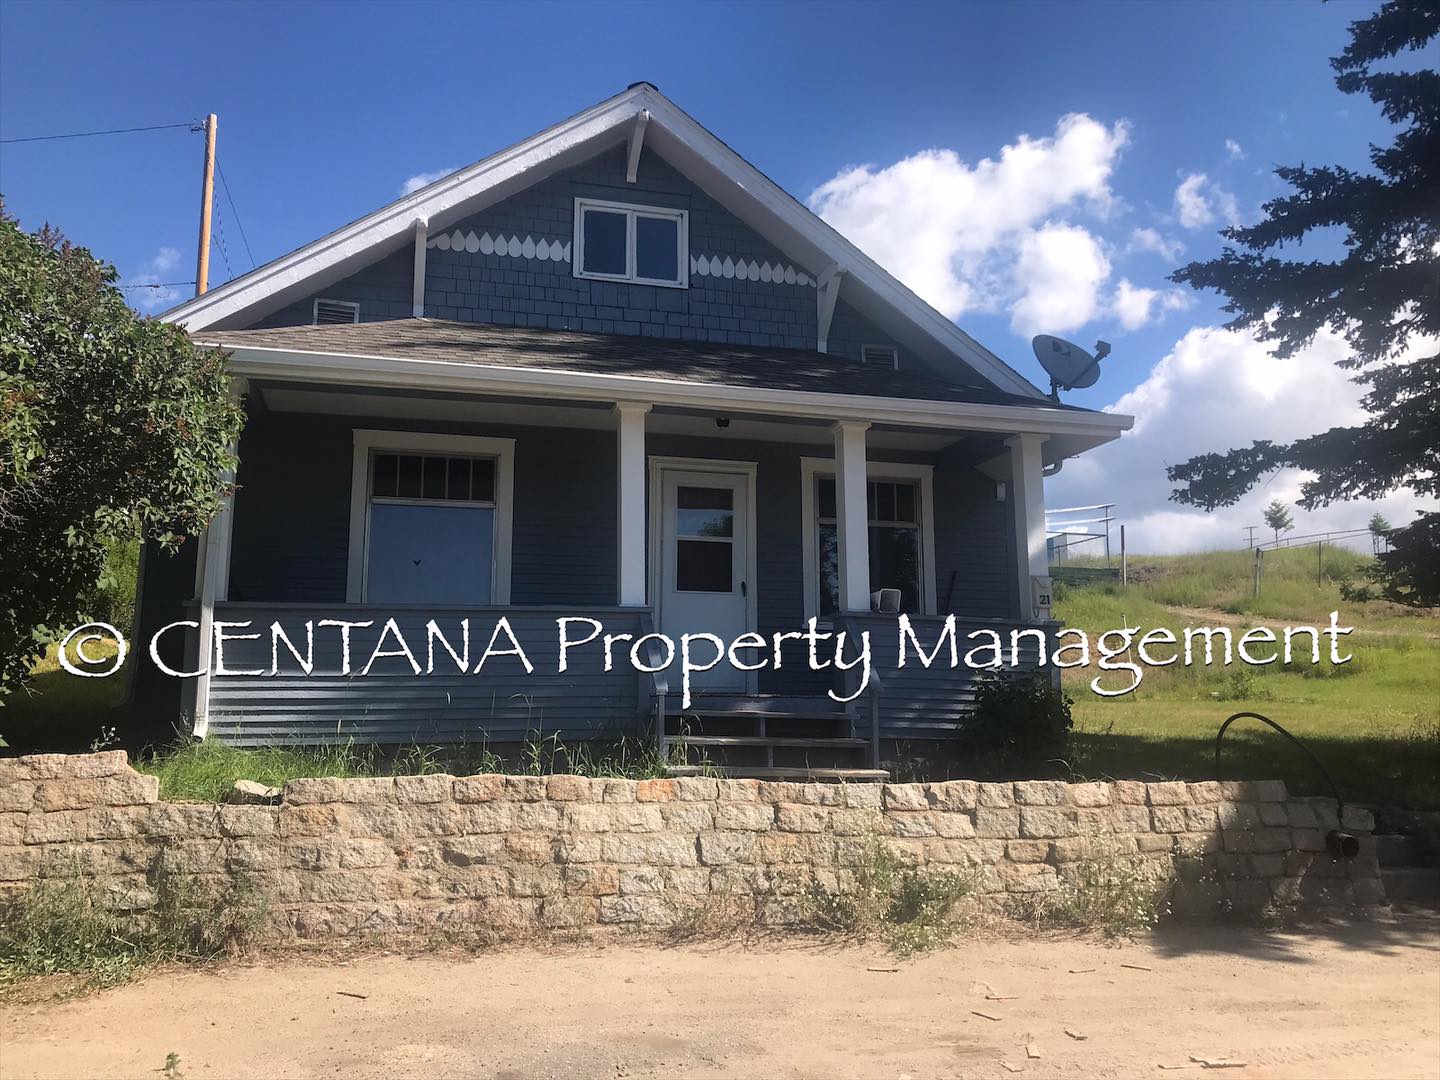 Centana Property Management